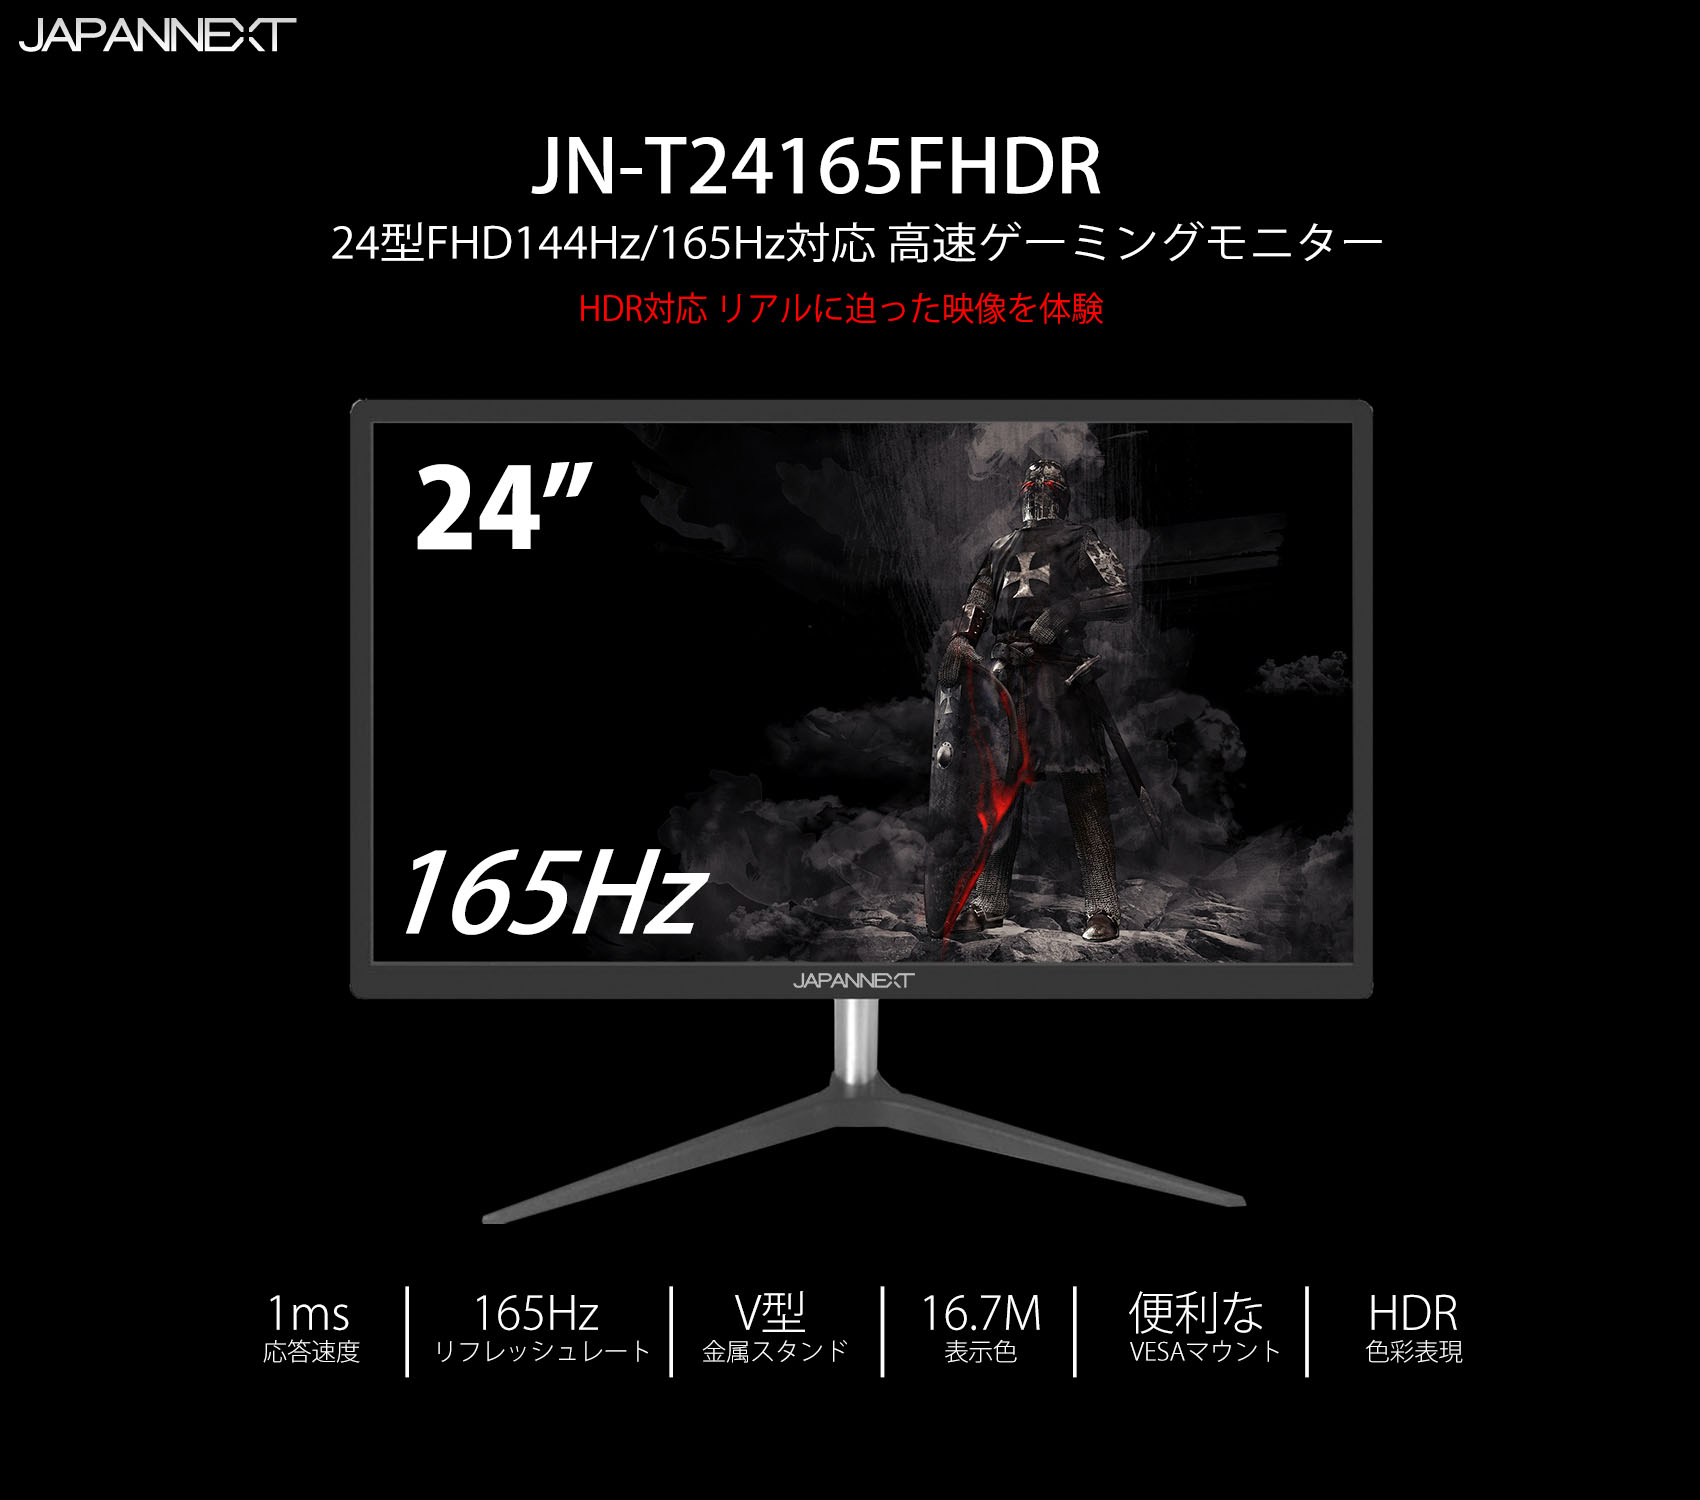 JAPANNEXT JN-T24165FHDR 24インチ 144hz/165Hz ゲーミングモニター 